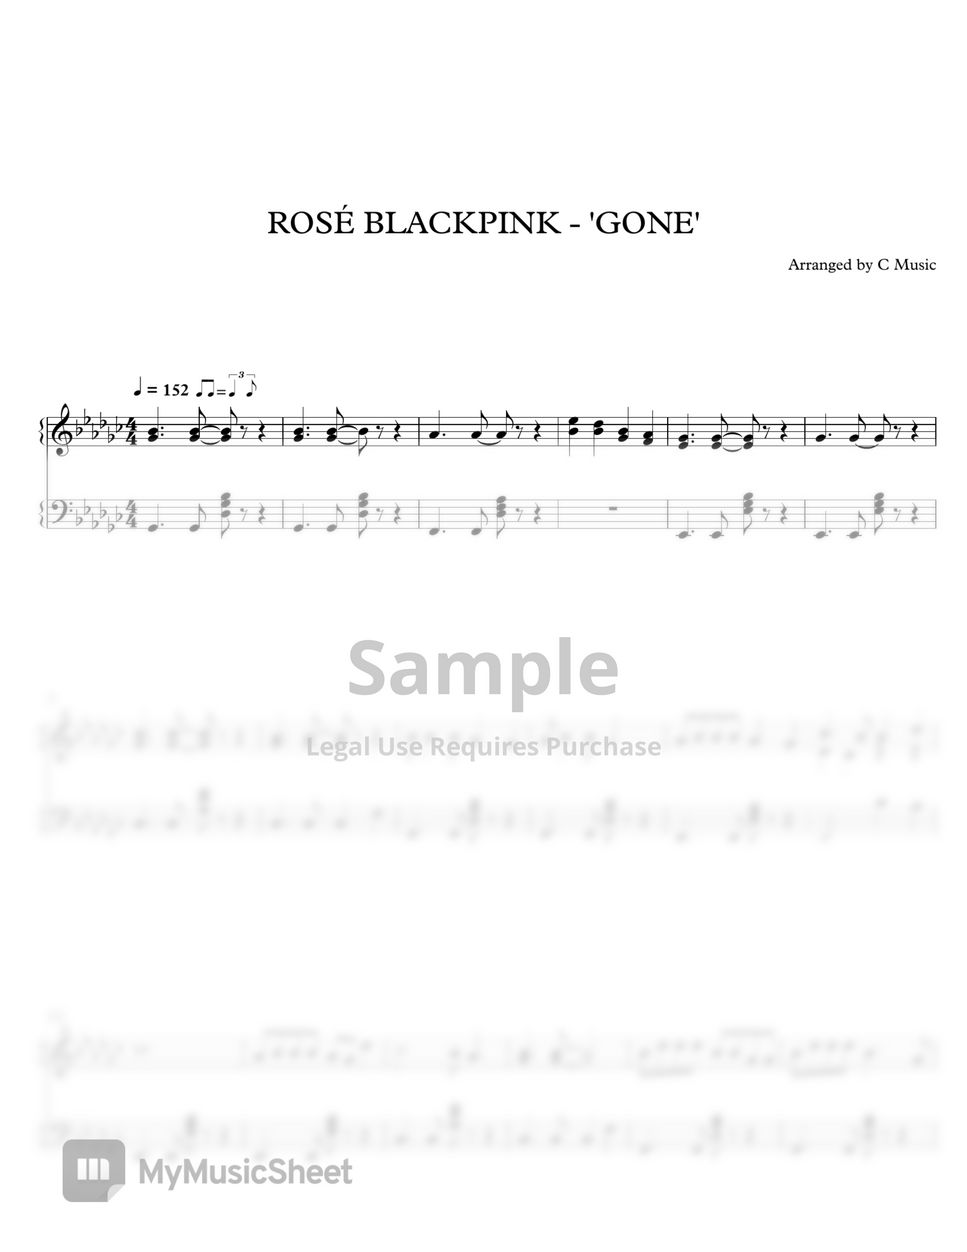 ROSÉ BLACKPINK - GONE by C Music